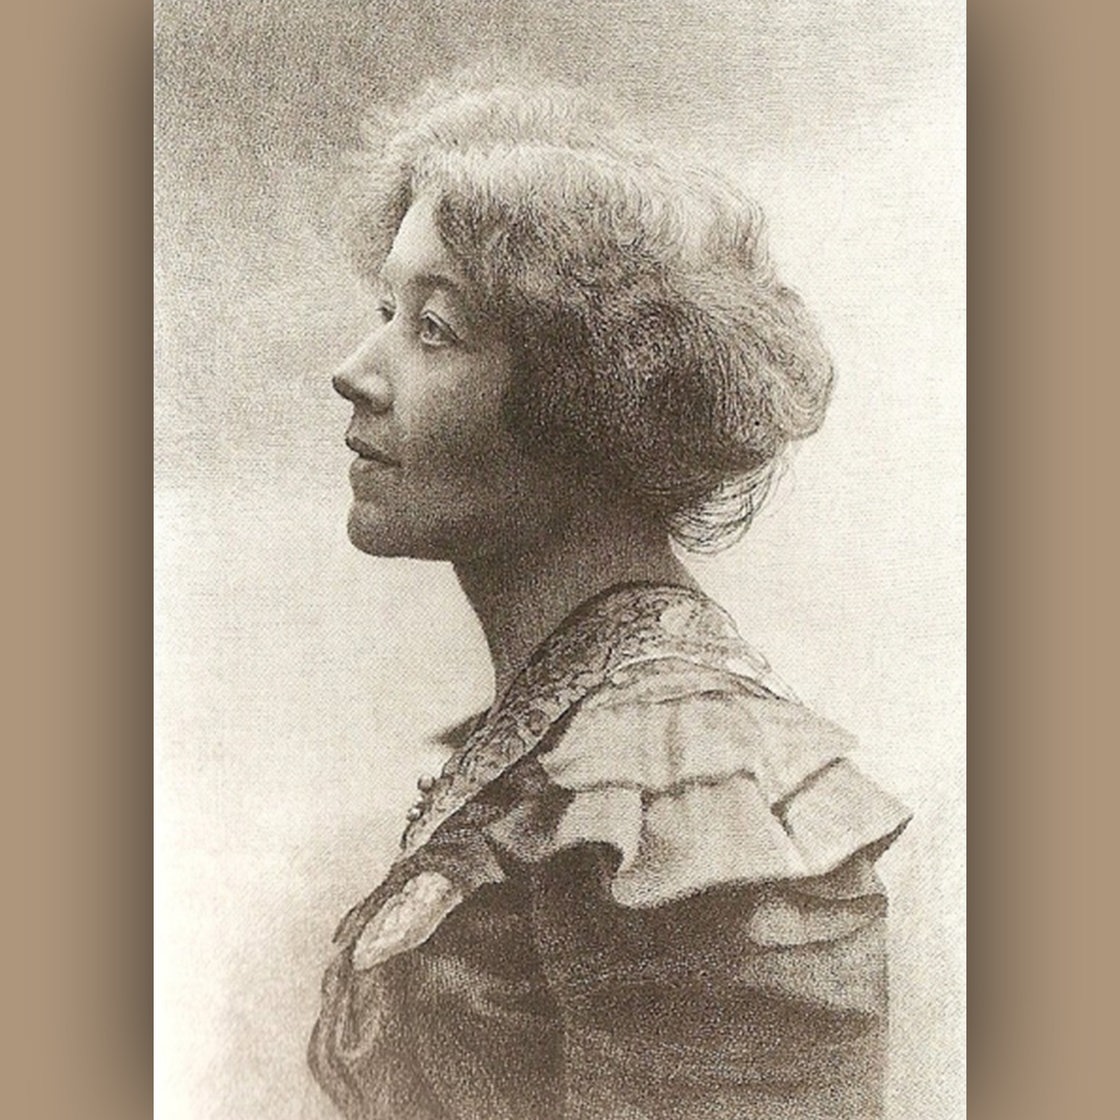 Ricarda Huch (1904)